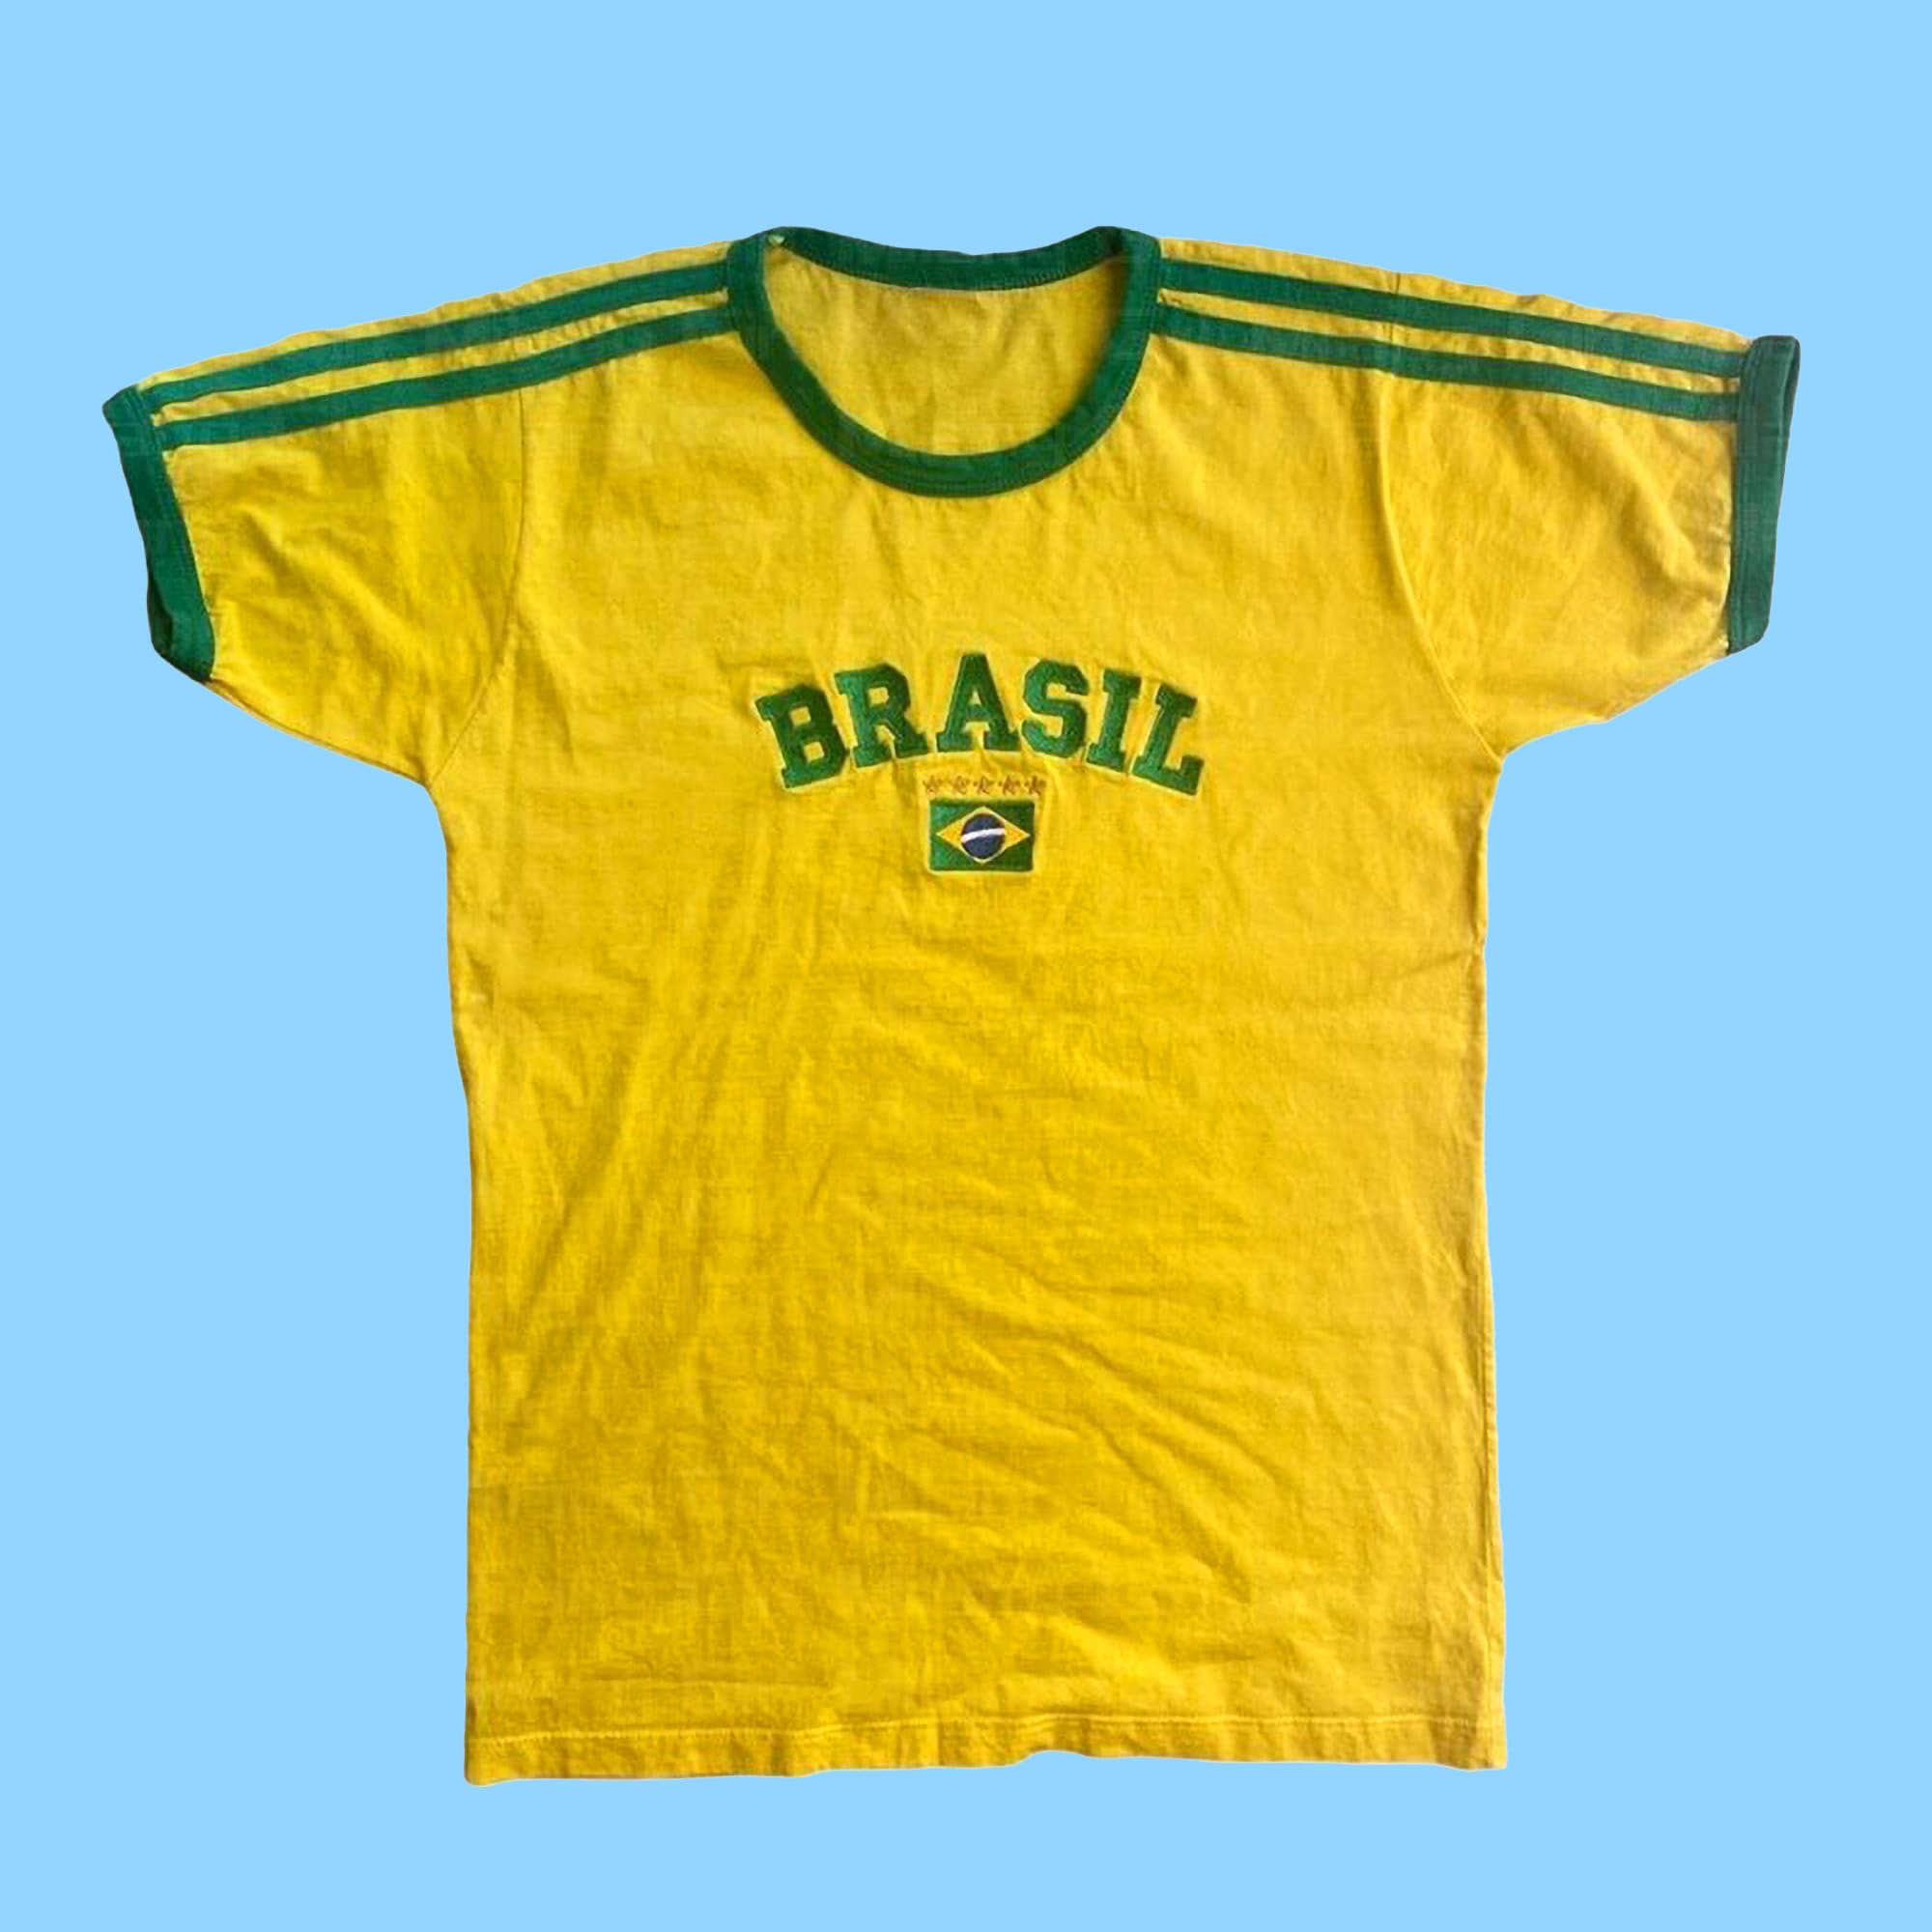 Buy Brasil Tee Shirt Online In India -  India